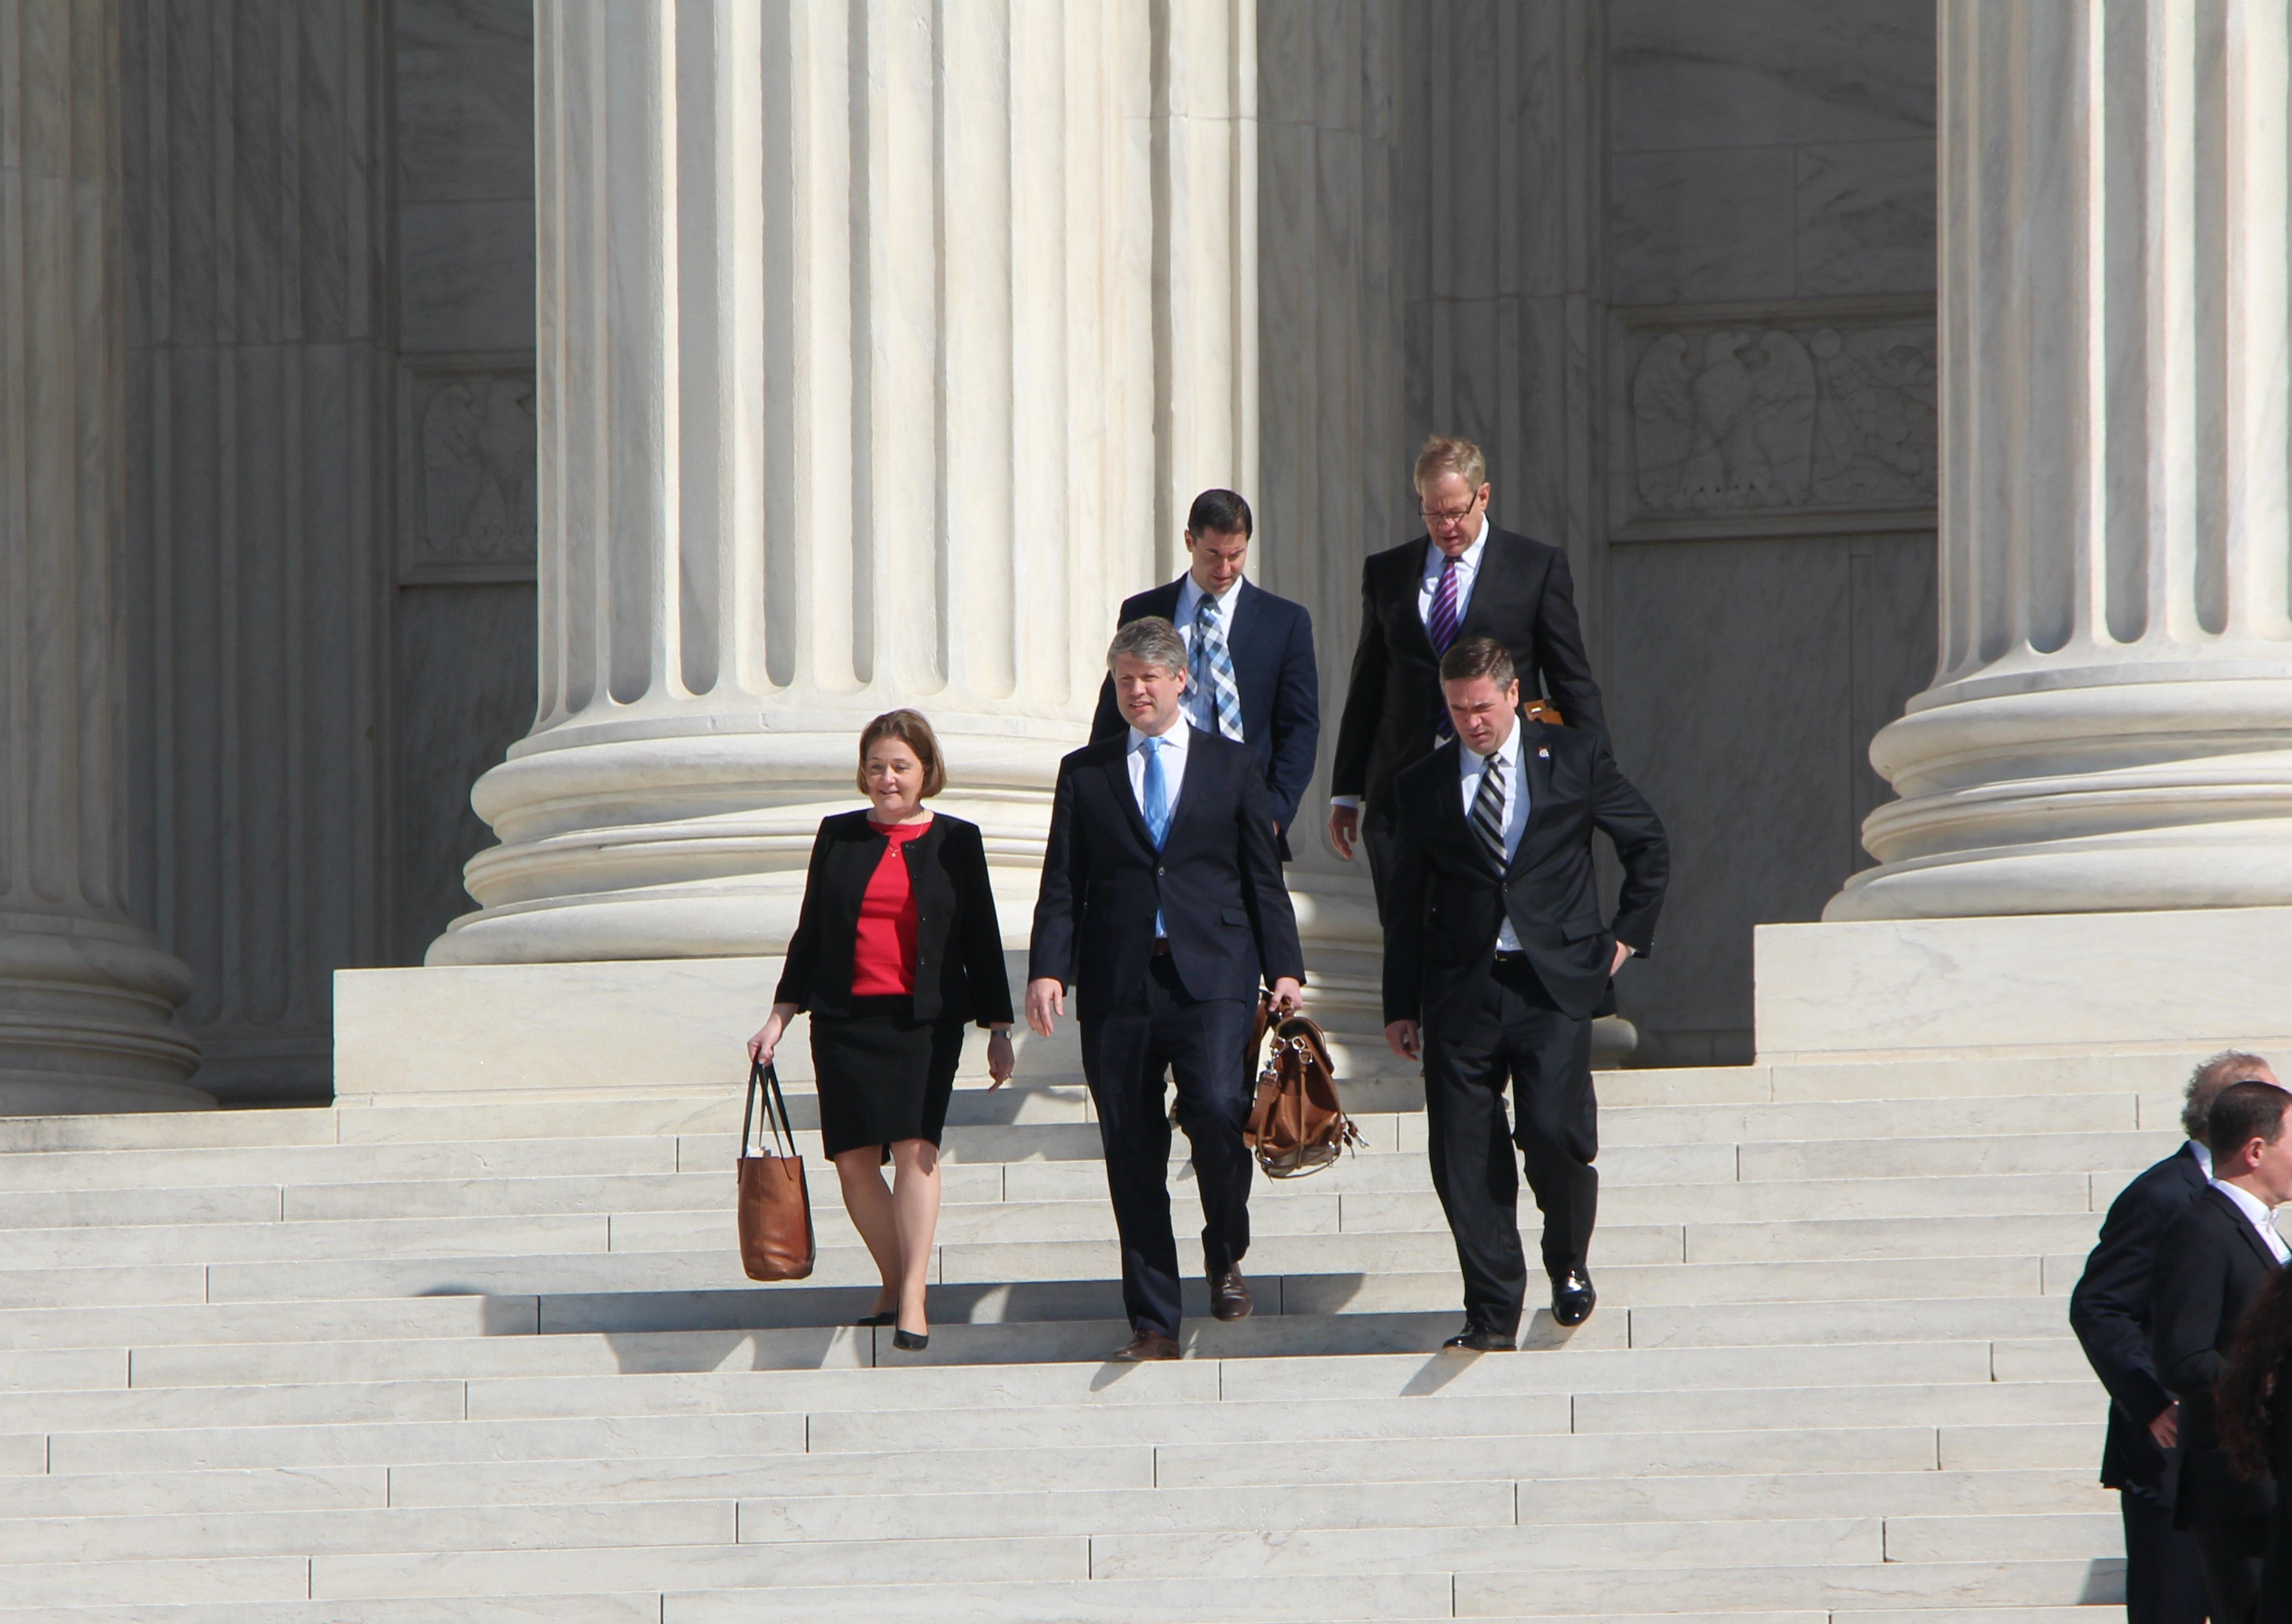 Biden v. Nebraska Front Row (left to right): Attorneys General Brenna Bird (Iowa), Mike Hilgers (Nebraska), Andrew Bailey (Missouri) Back Row (left to right): Solicitor General Jim Campbell (Nebraska) , Chief Counselor Ray Wagner (Missouri)